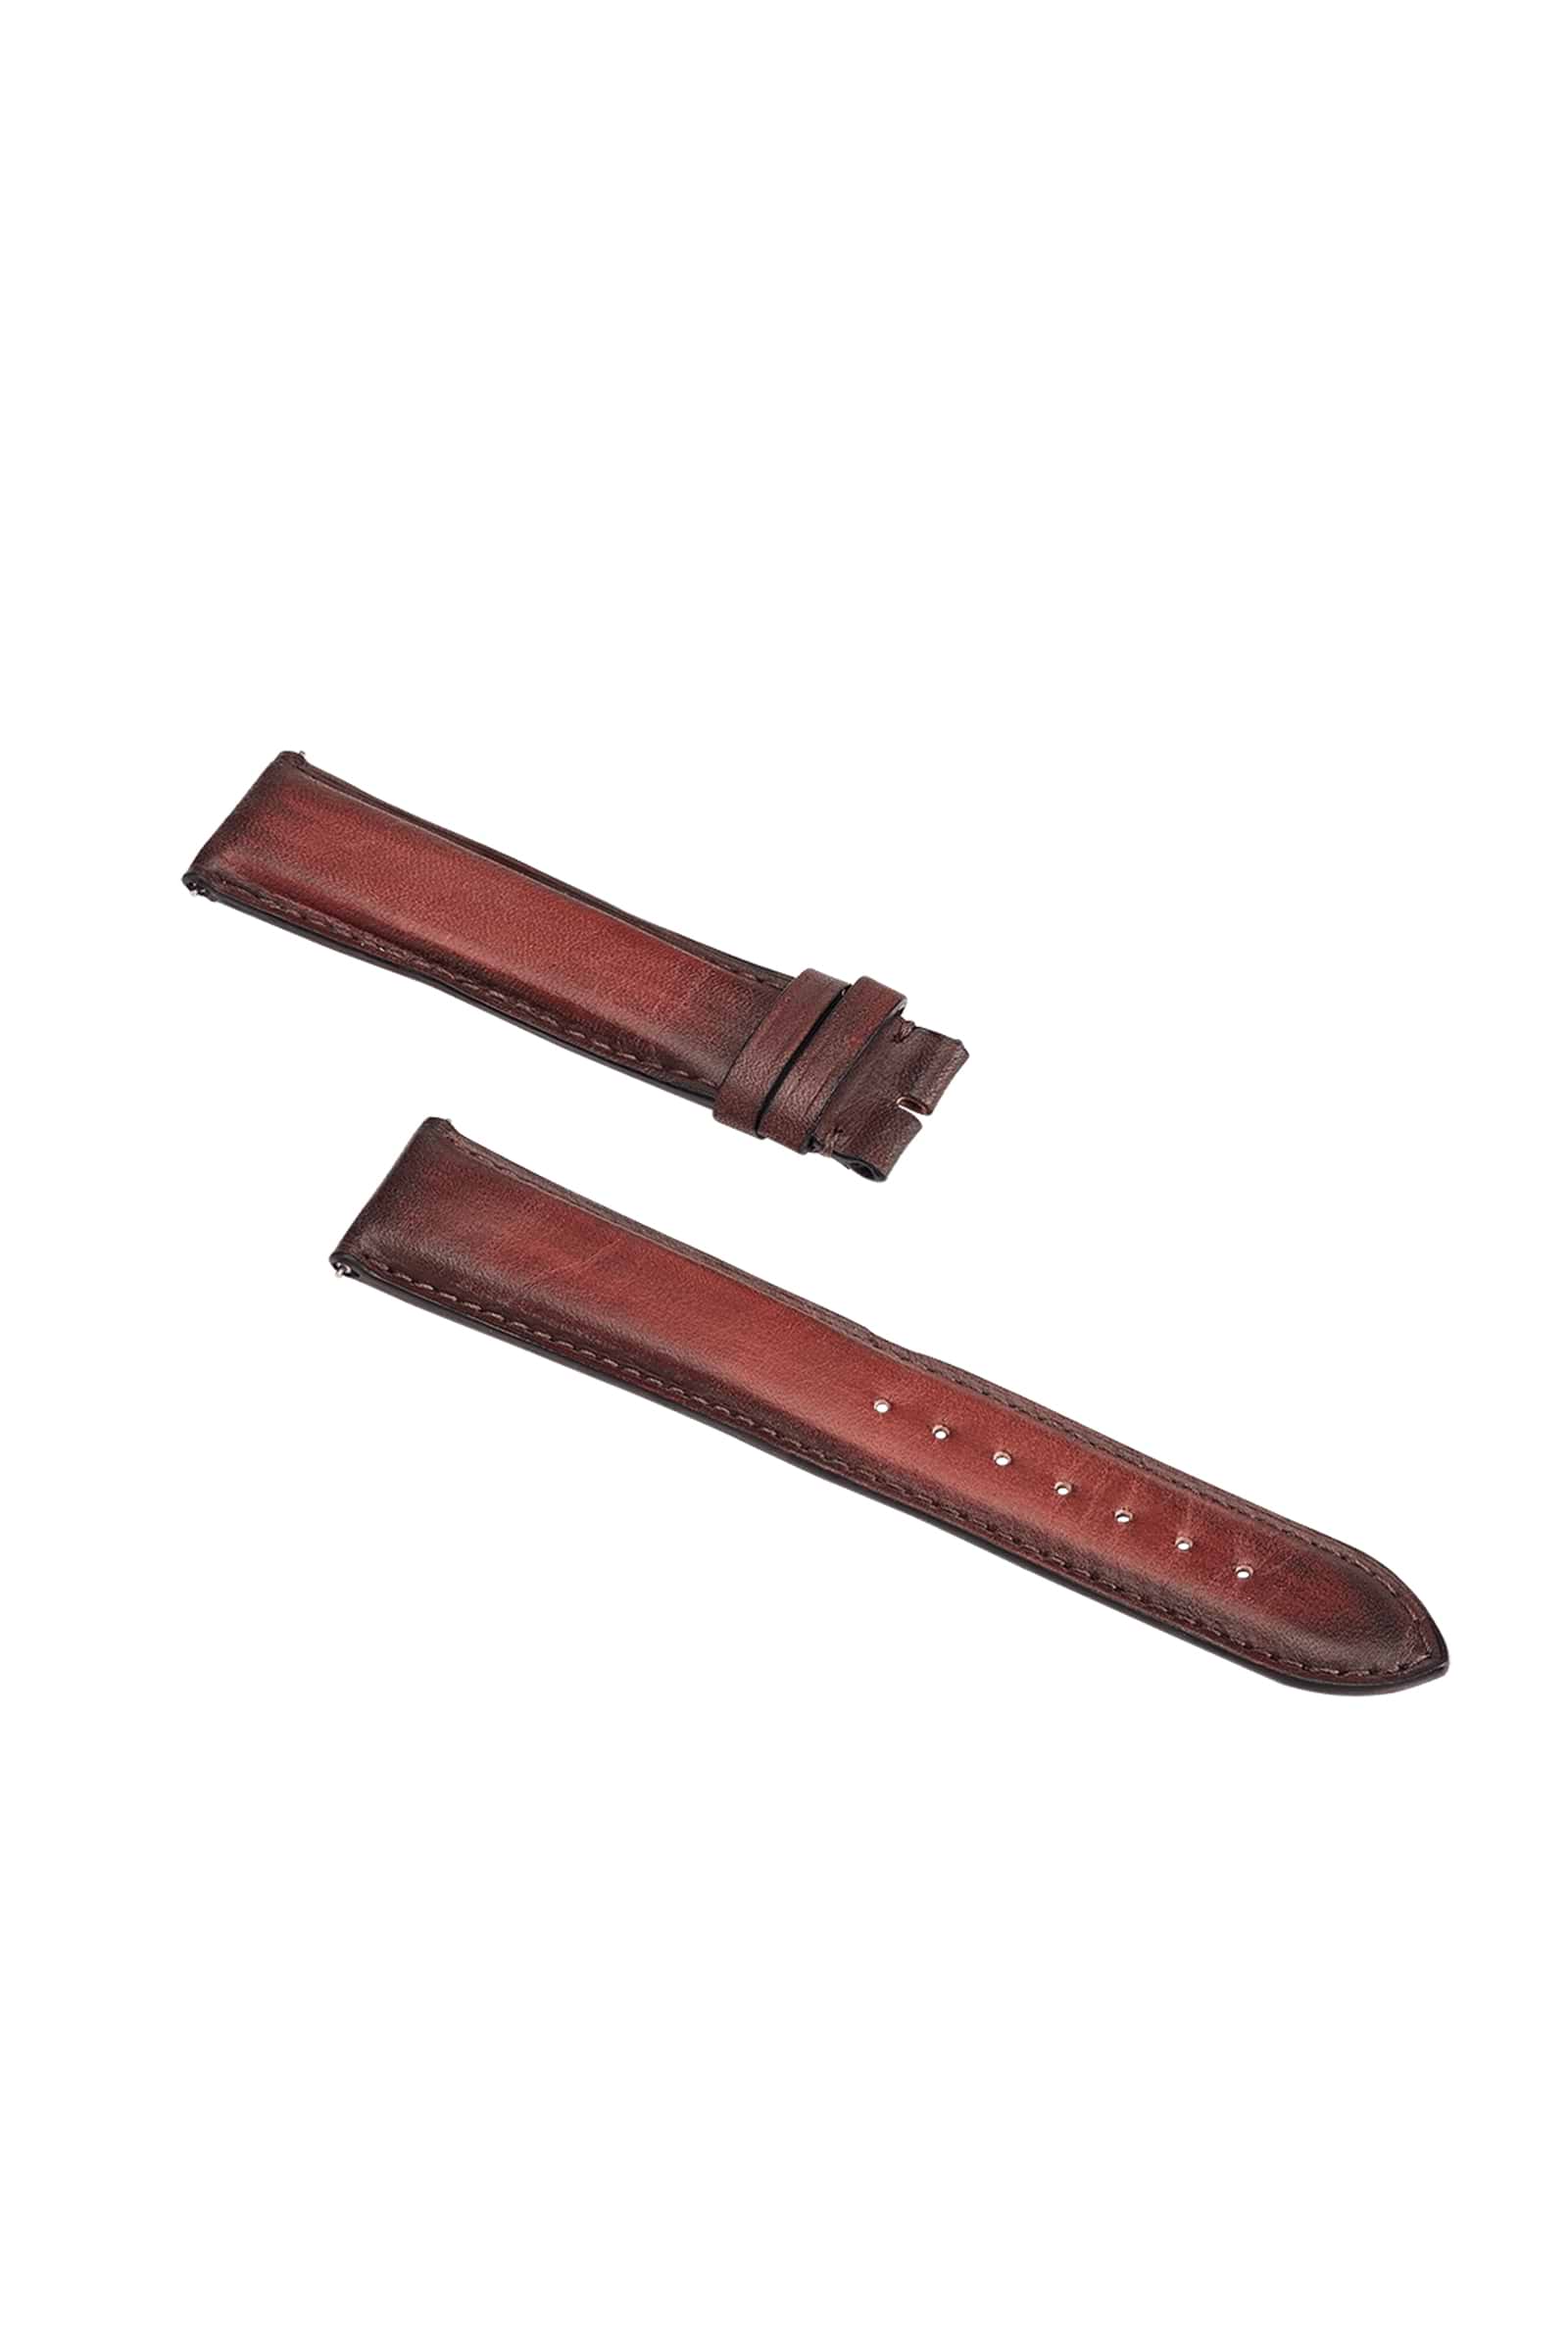 patina chocolate leather strap